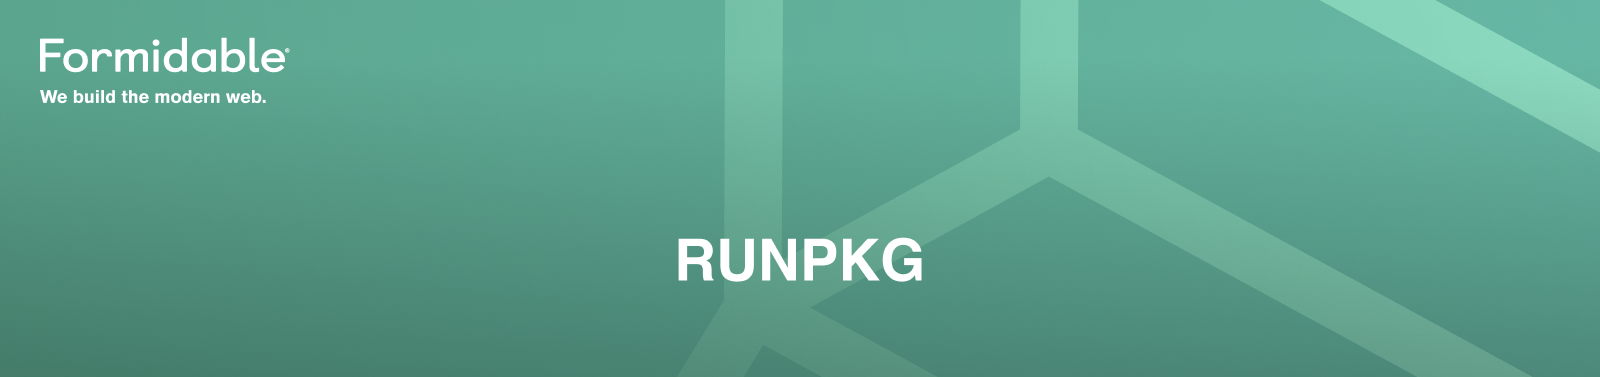 Runpkg — Formidable, We build the modern web